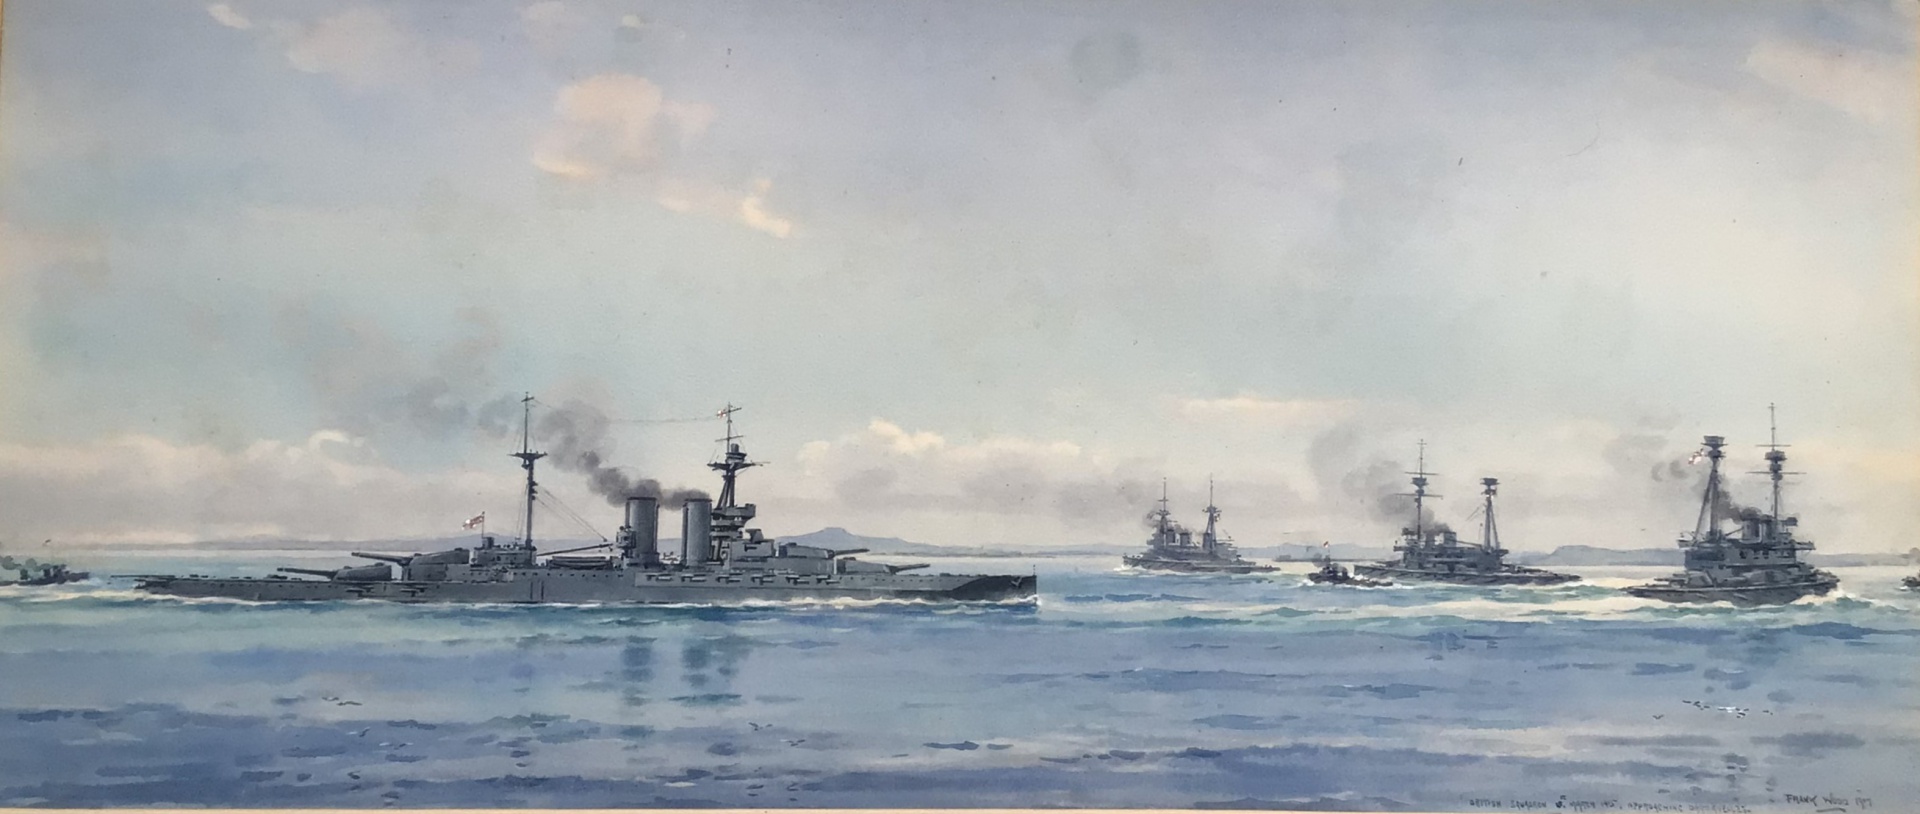 HMS QUEEN ELIZABETH ARRIVING AT THE DARDANELLES